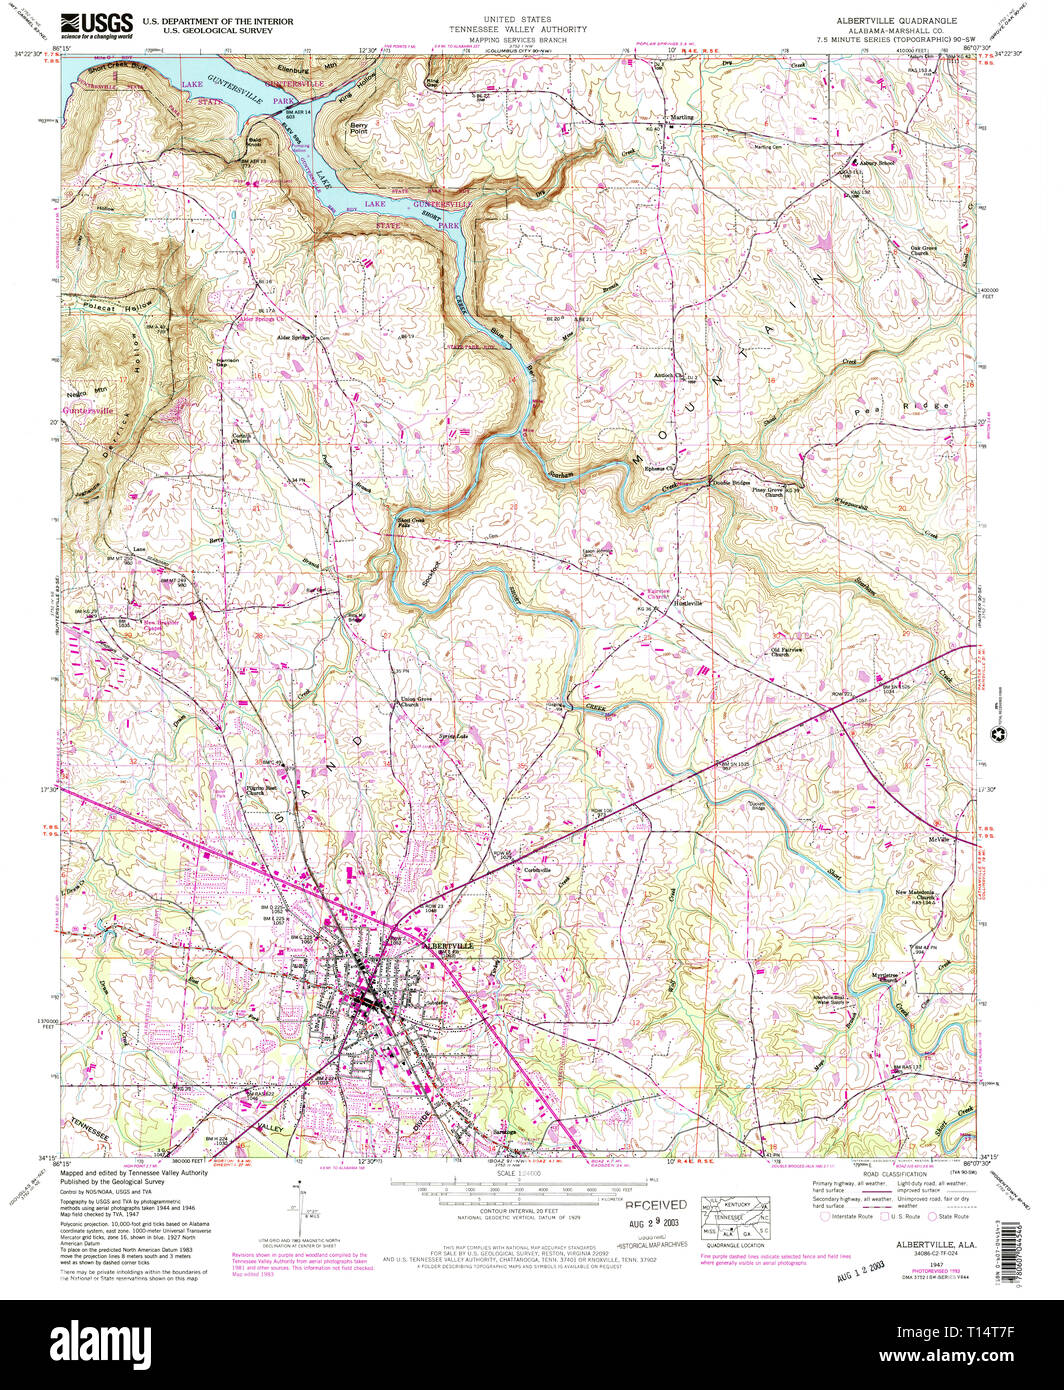 Usgs Topo Map Alabama Al Albertville 303083 1947 24000 T14T7F 